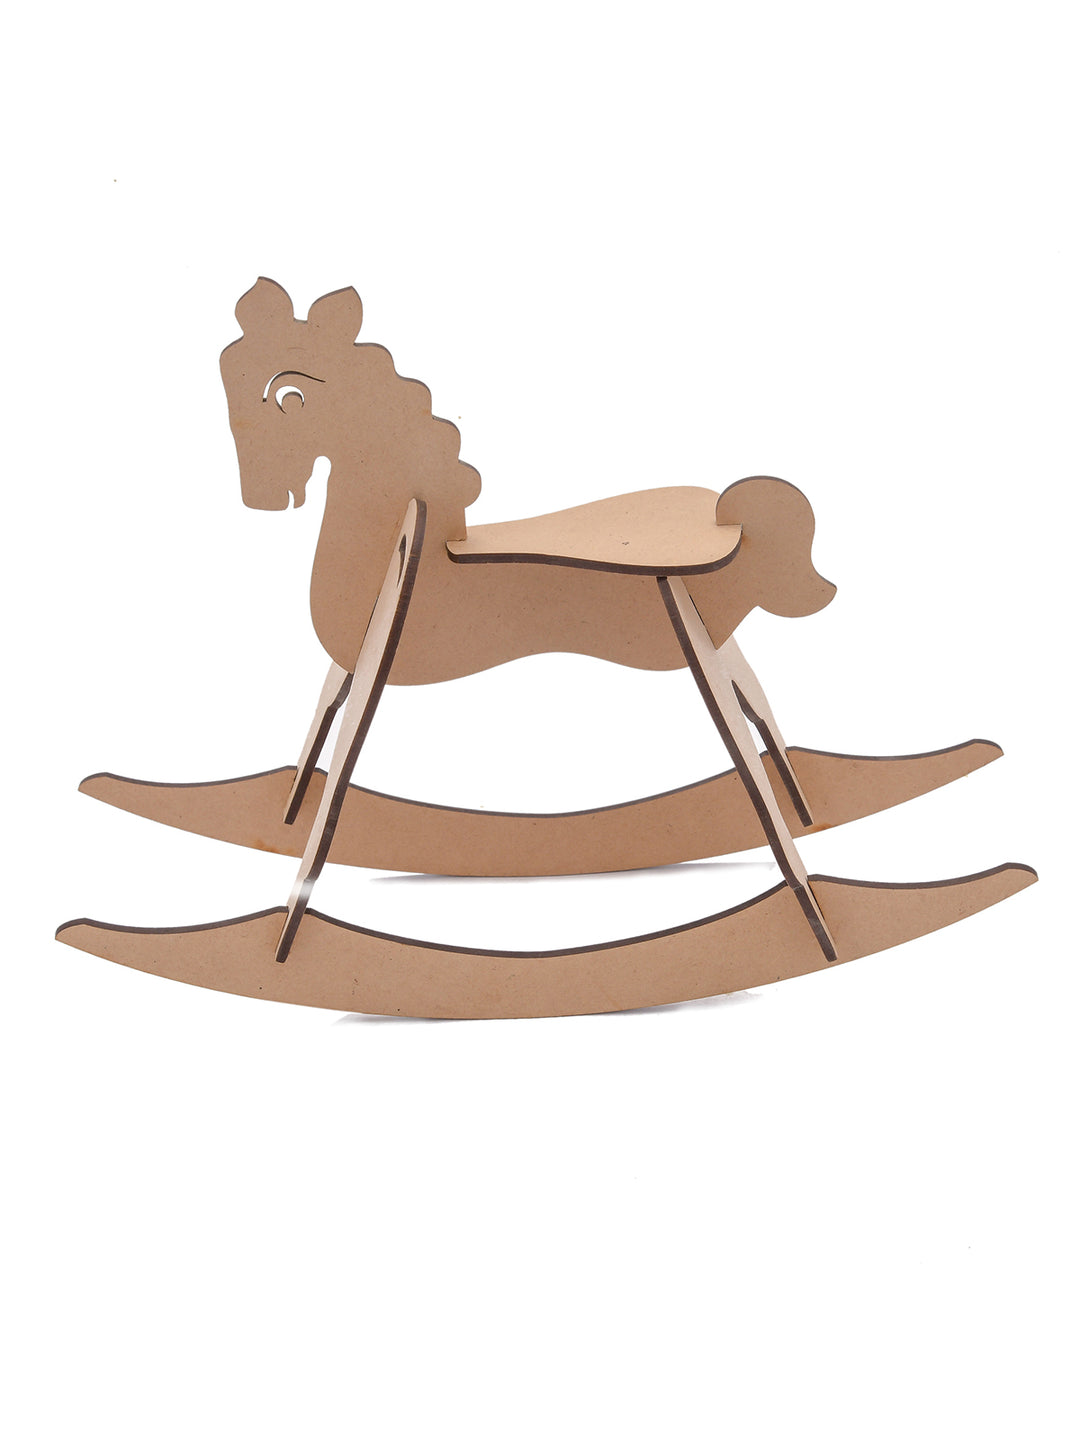 Wooden DIY Rocking Horse Toy